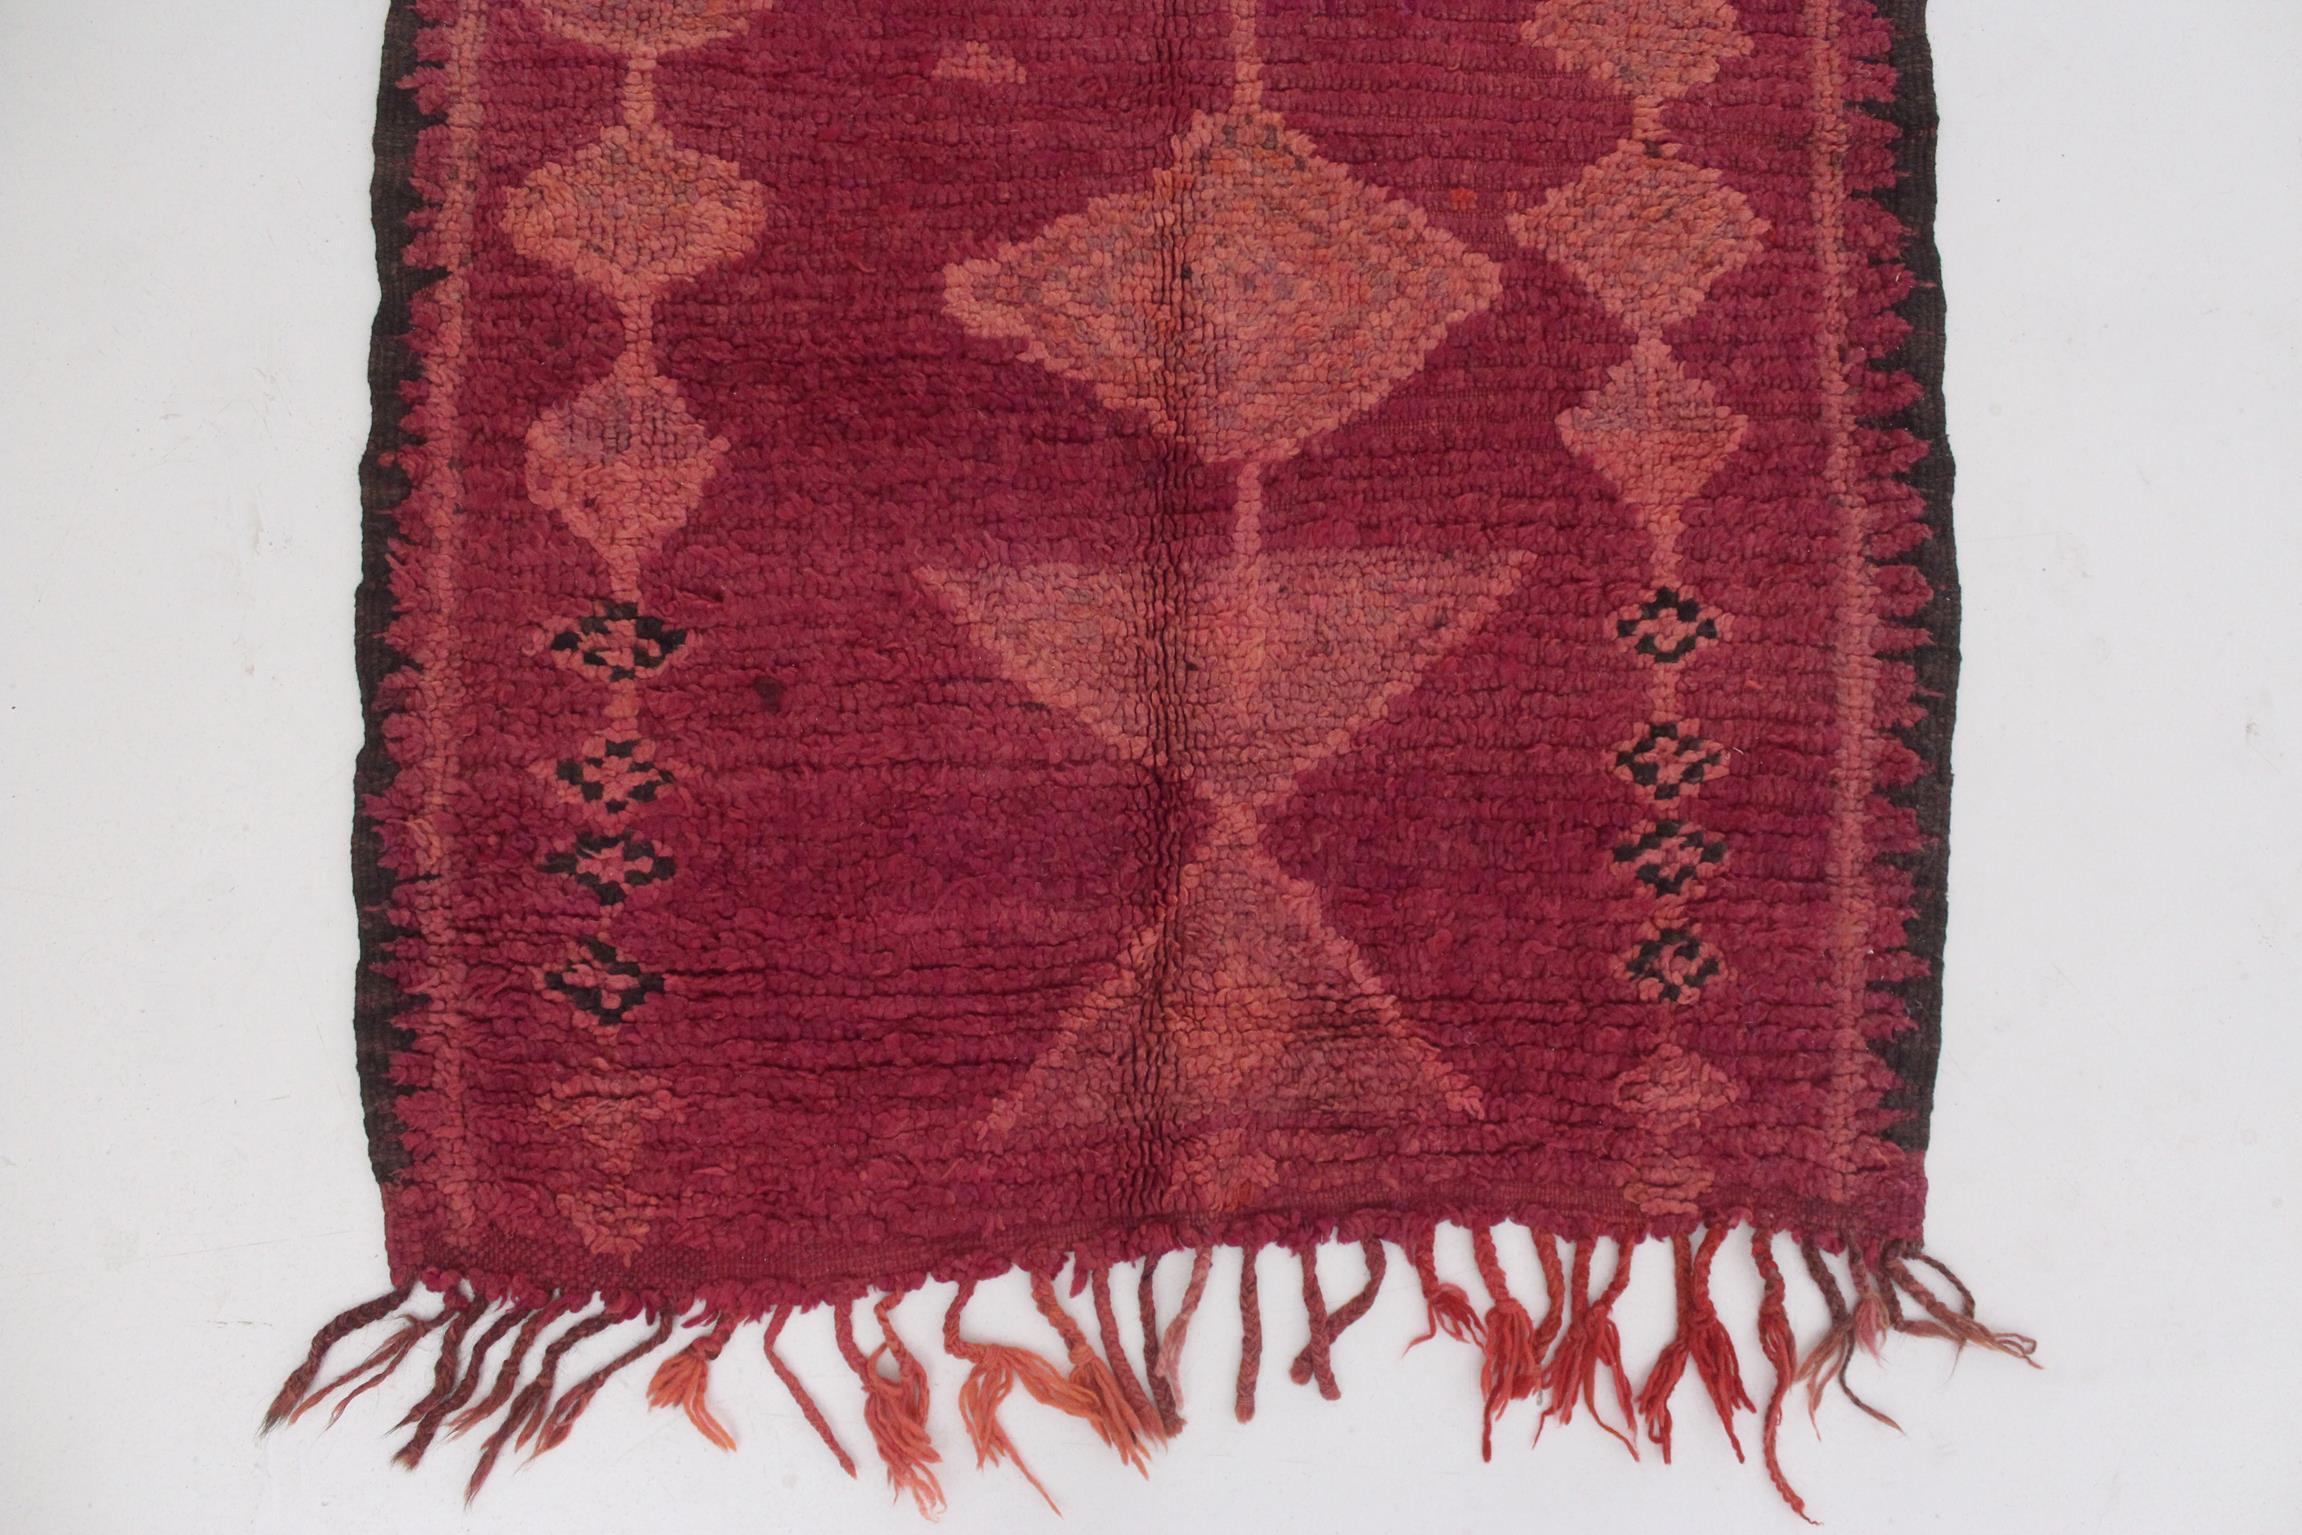 Hand-Woven Vintage Moroccan Boujad runner rug - Raspberry - 3.4x10.5feet / 105x320cm For Sale